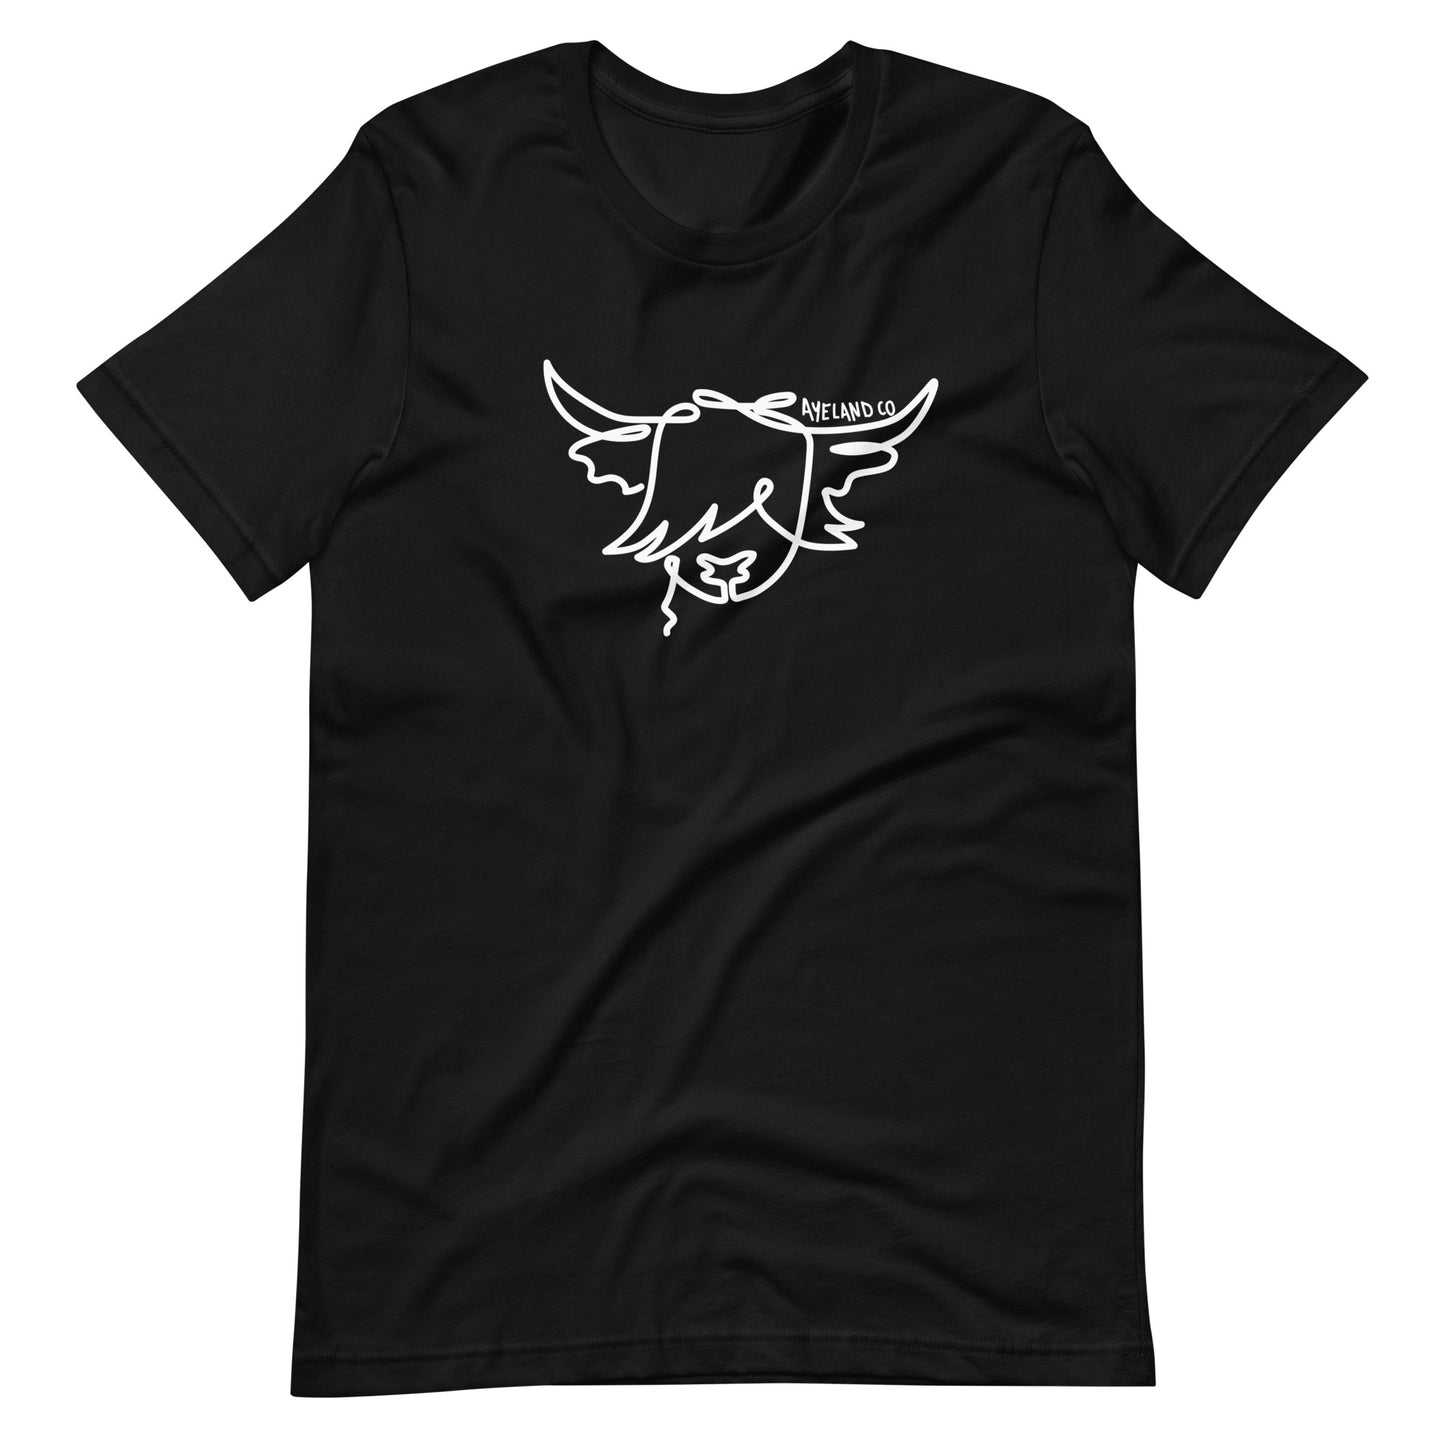 Silhouette highland cow line art head t-shirt for women